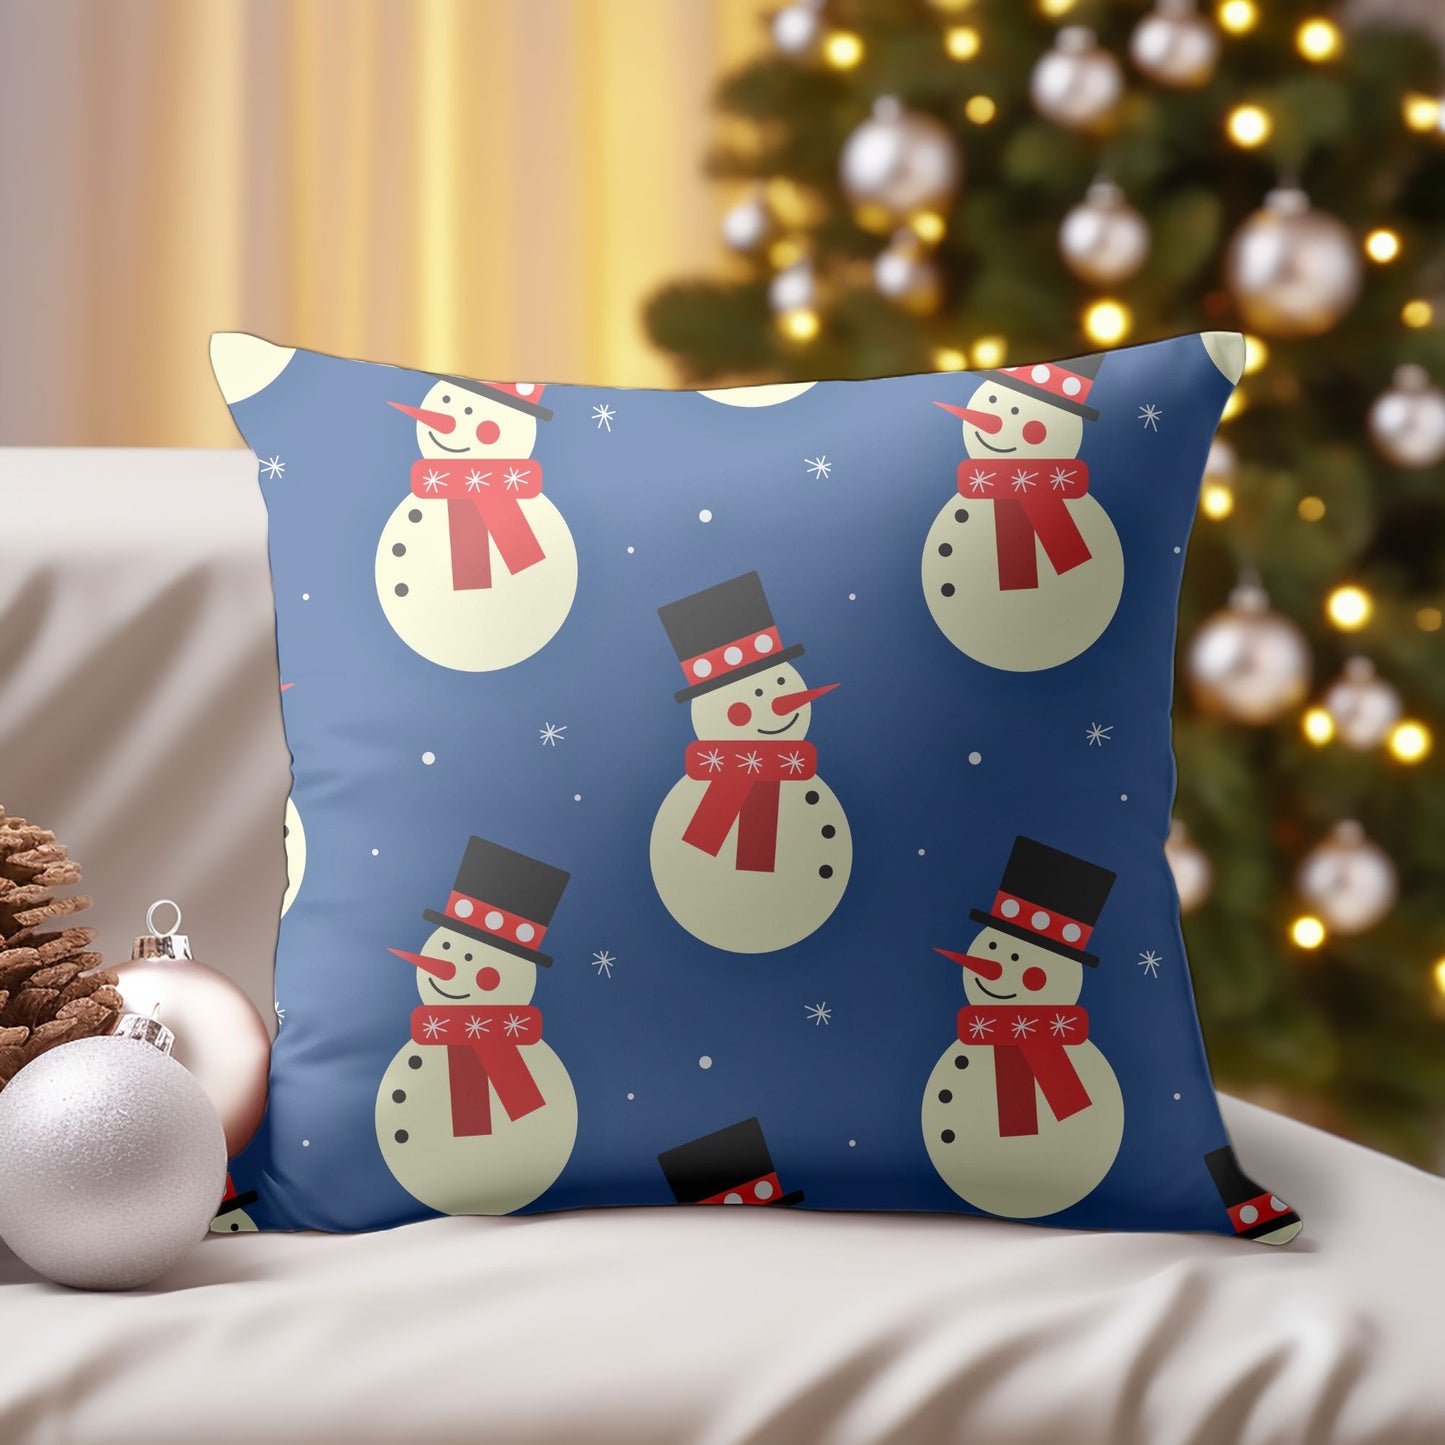 Homeezone's Snowman Pattern Decorative Throw Pillow Cushion